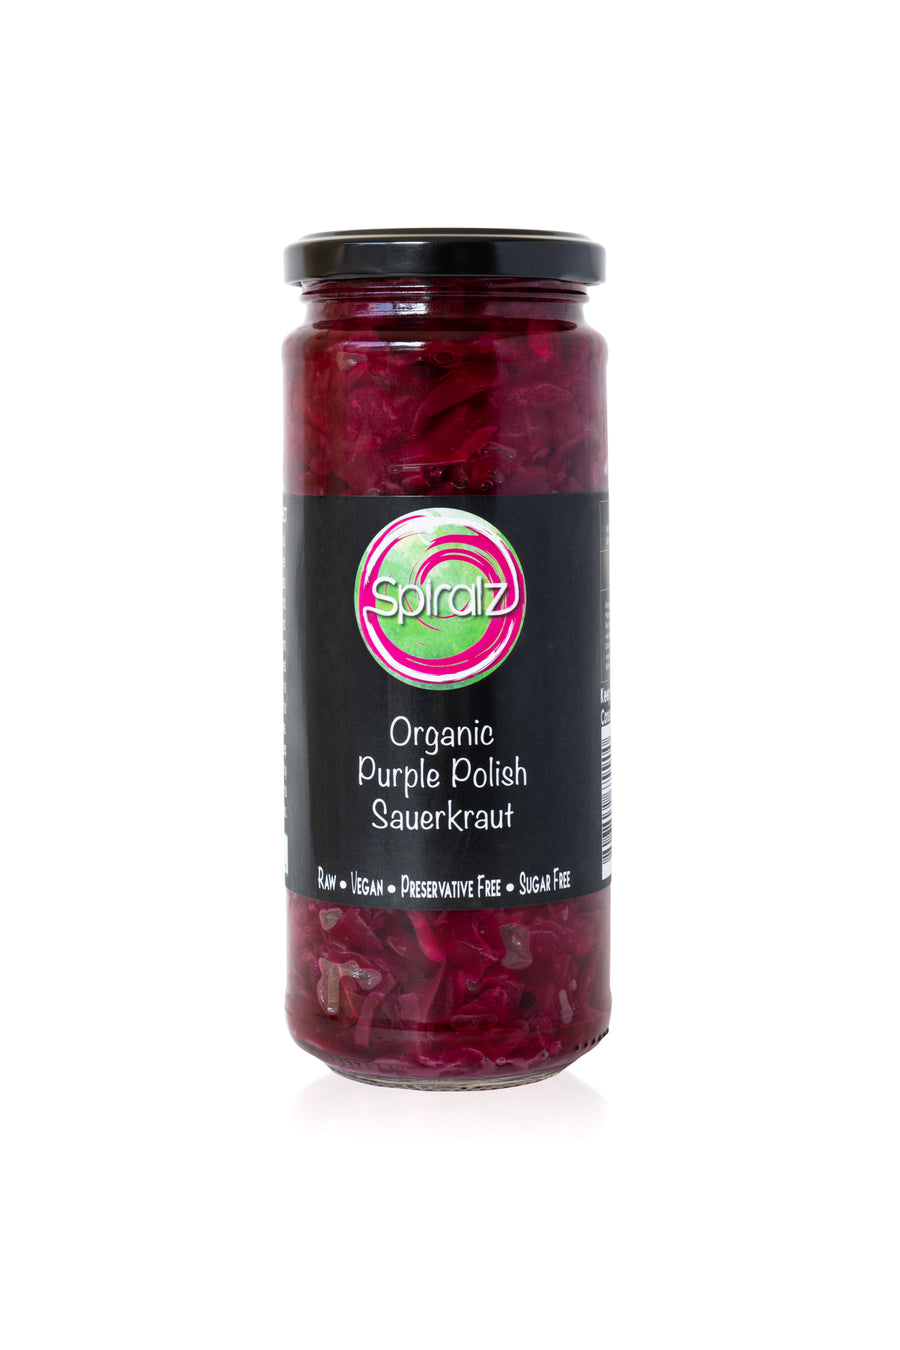 Spiralz Organic Purple Polish Sauerkraut